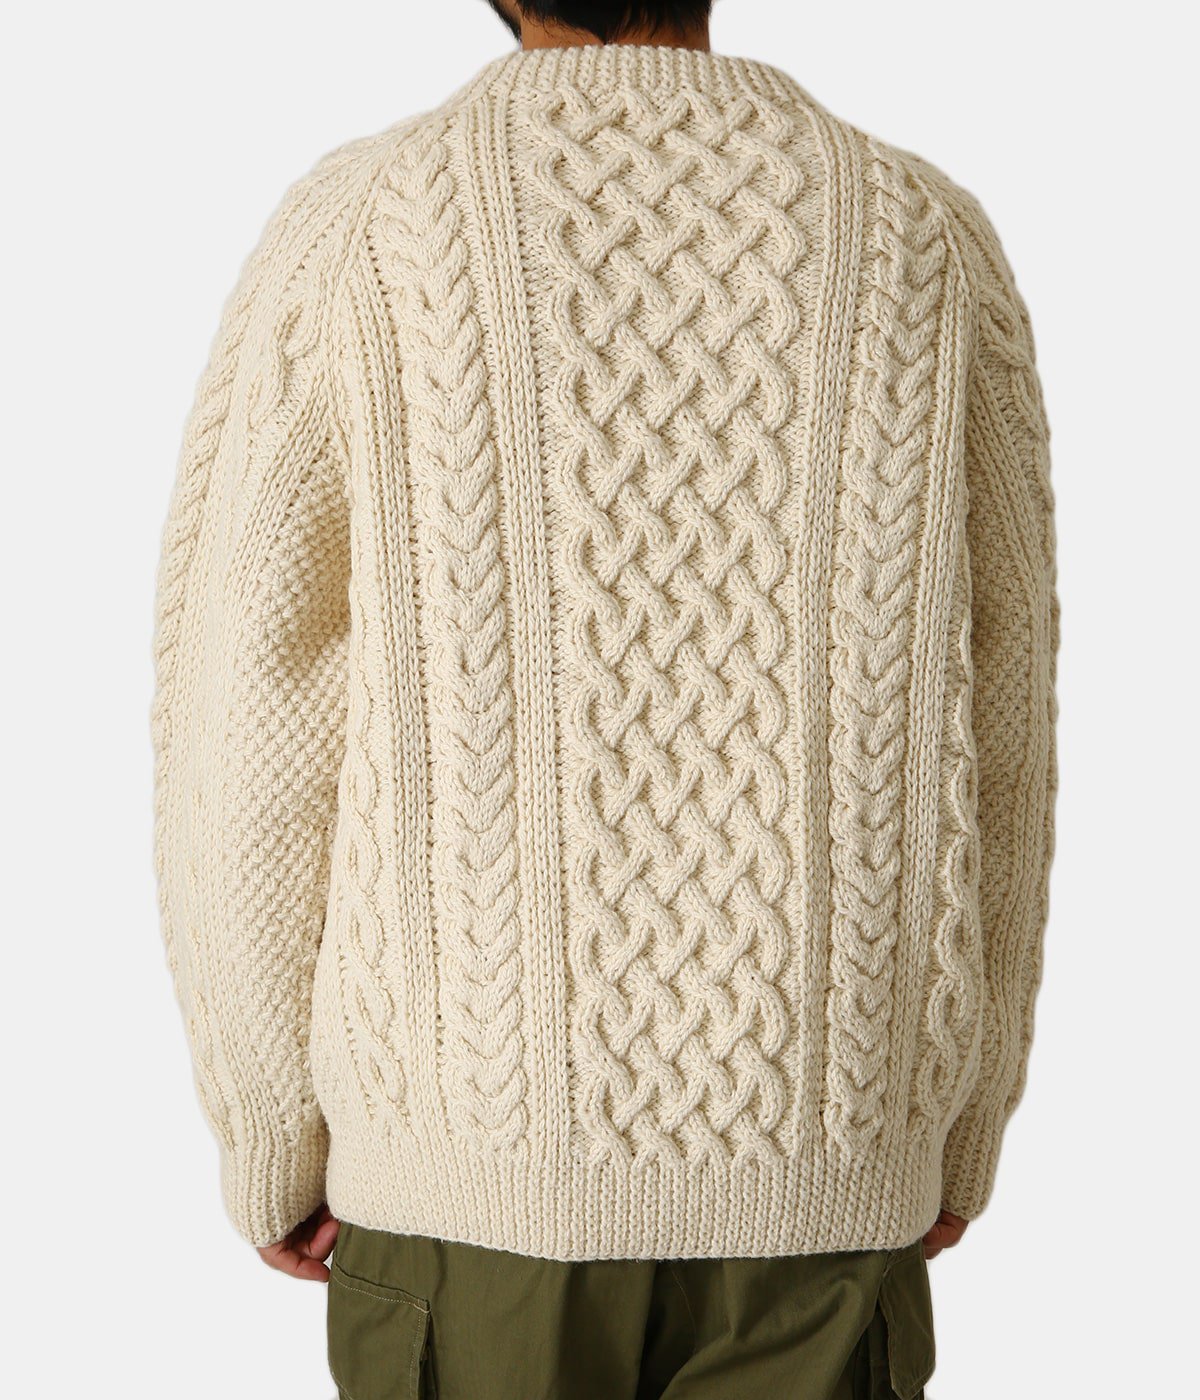 Crewneck Sweater (SIZE:48.50)